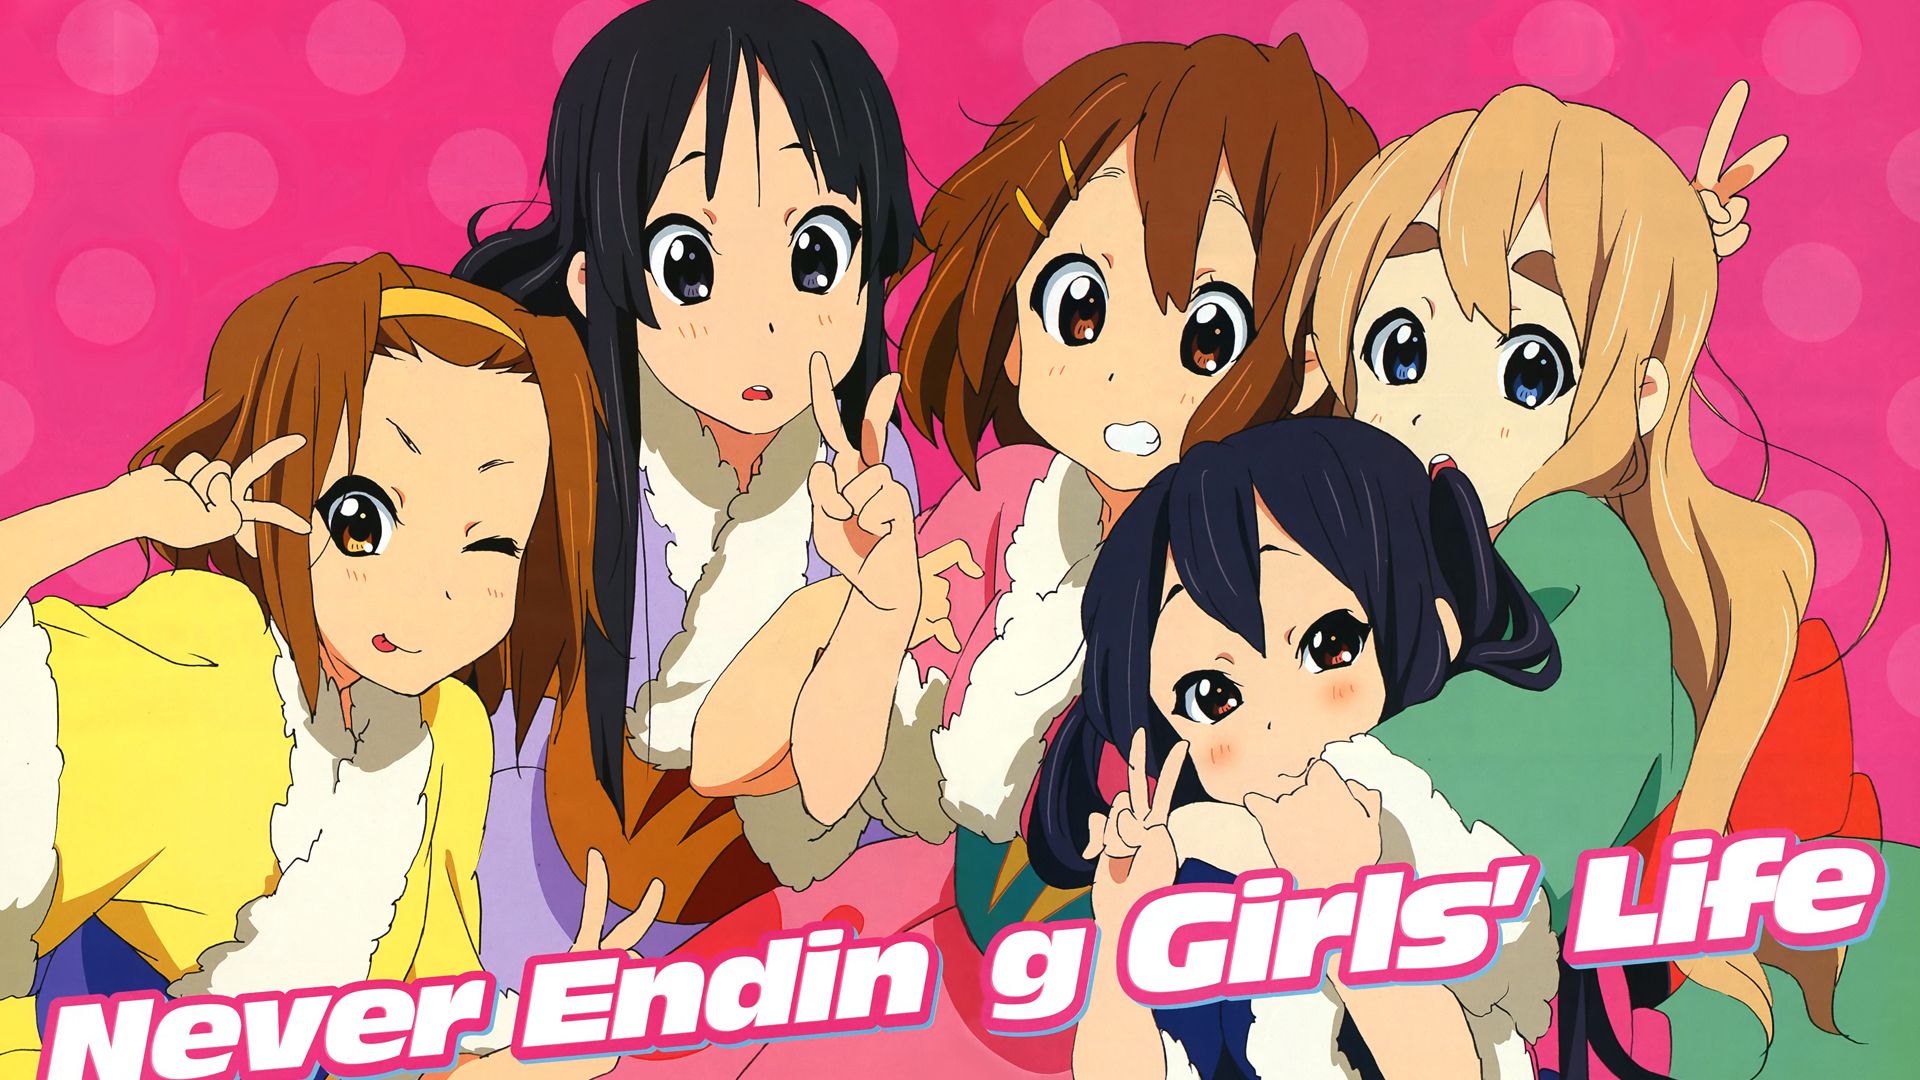 5 Anime Friends Girls wallpaper in 1920x1080 resolution